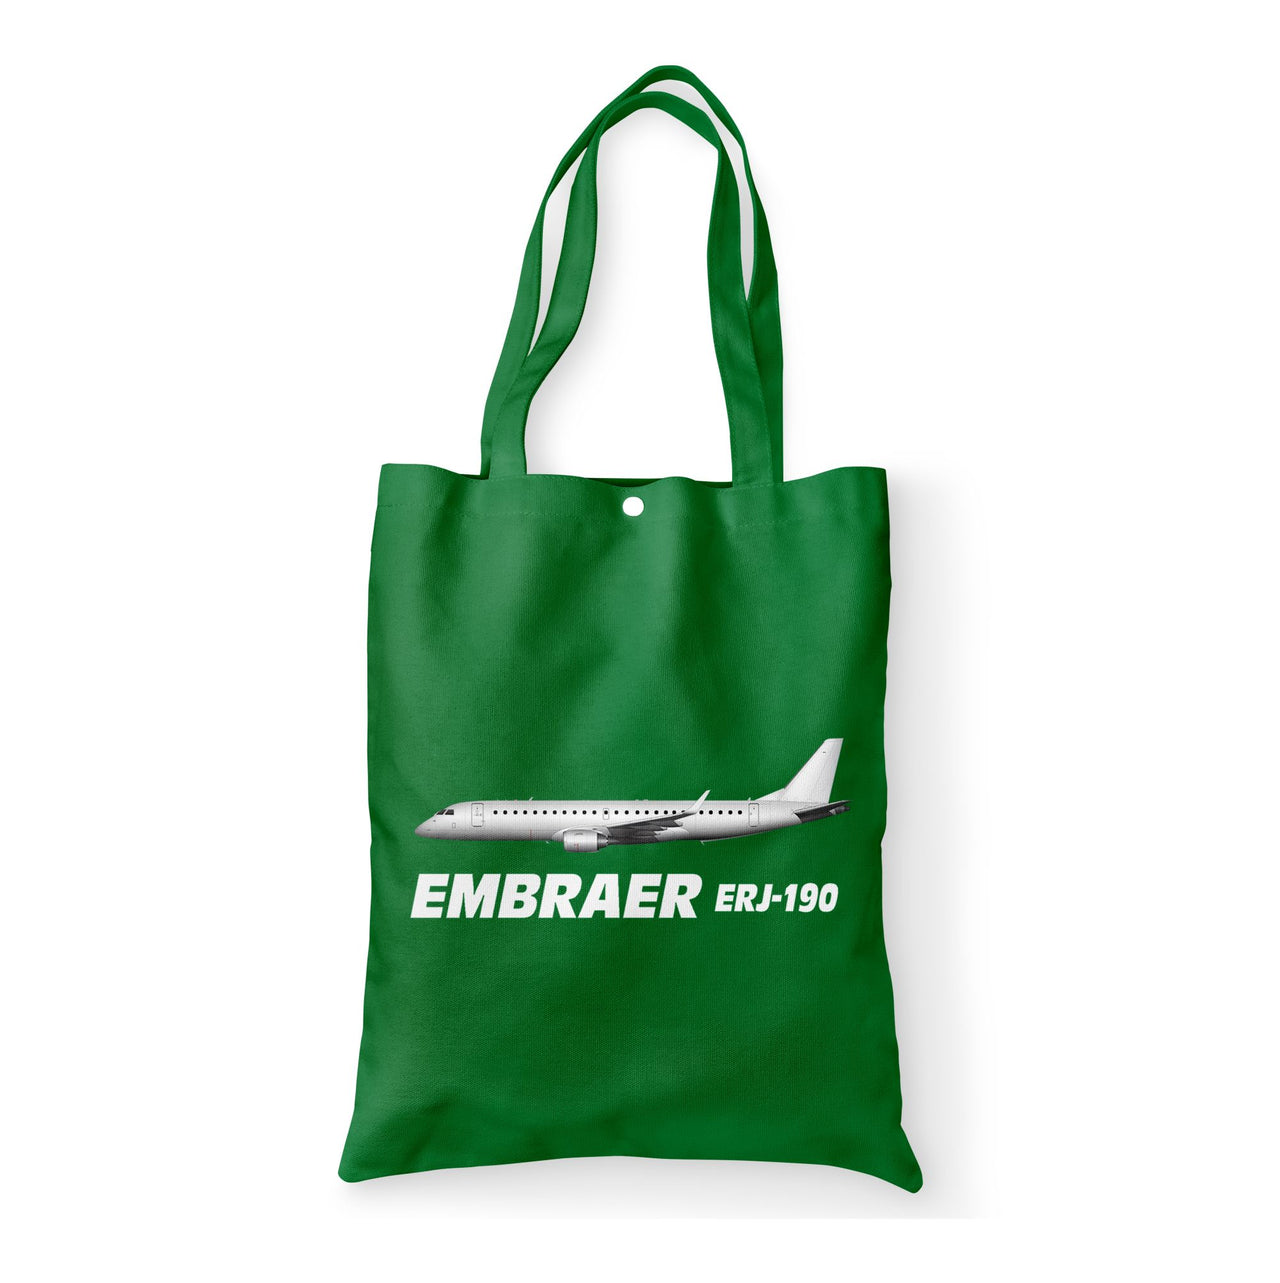 The Embraer ERJ-190 Designed Tote Bags